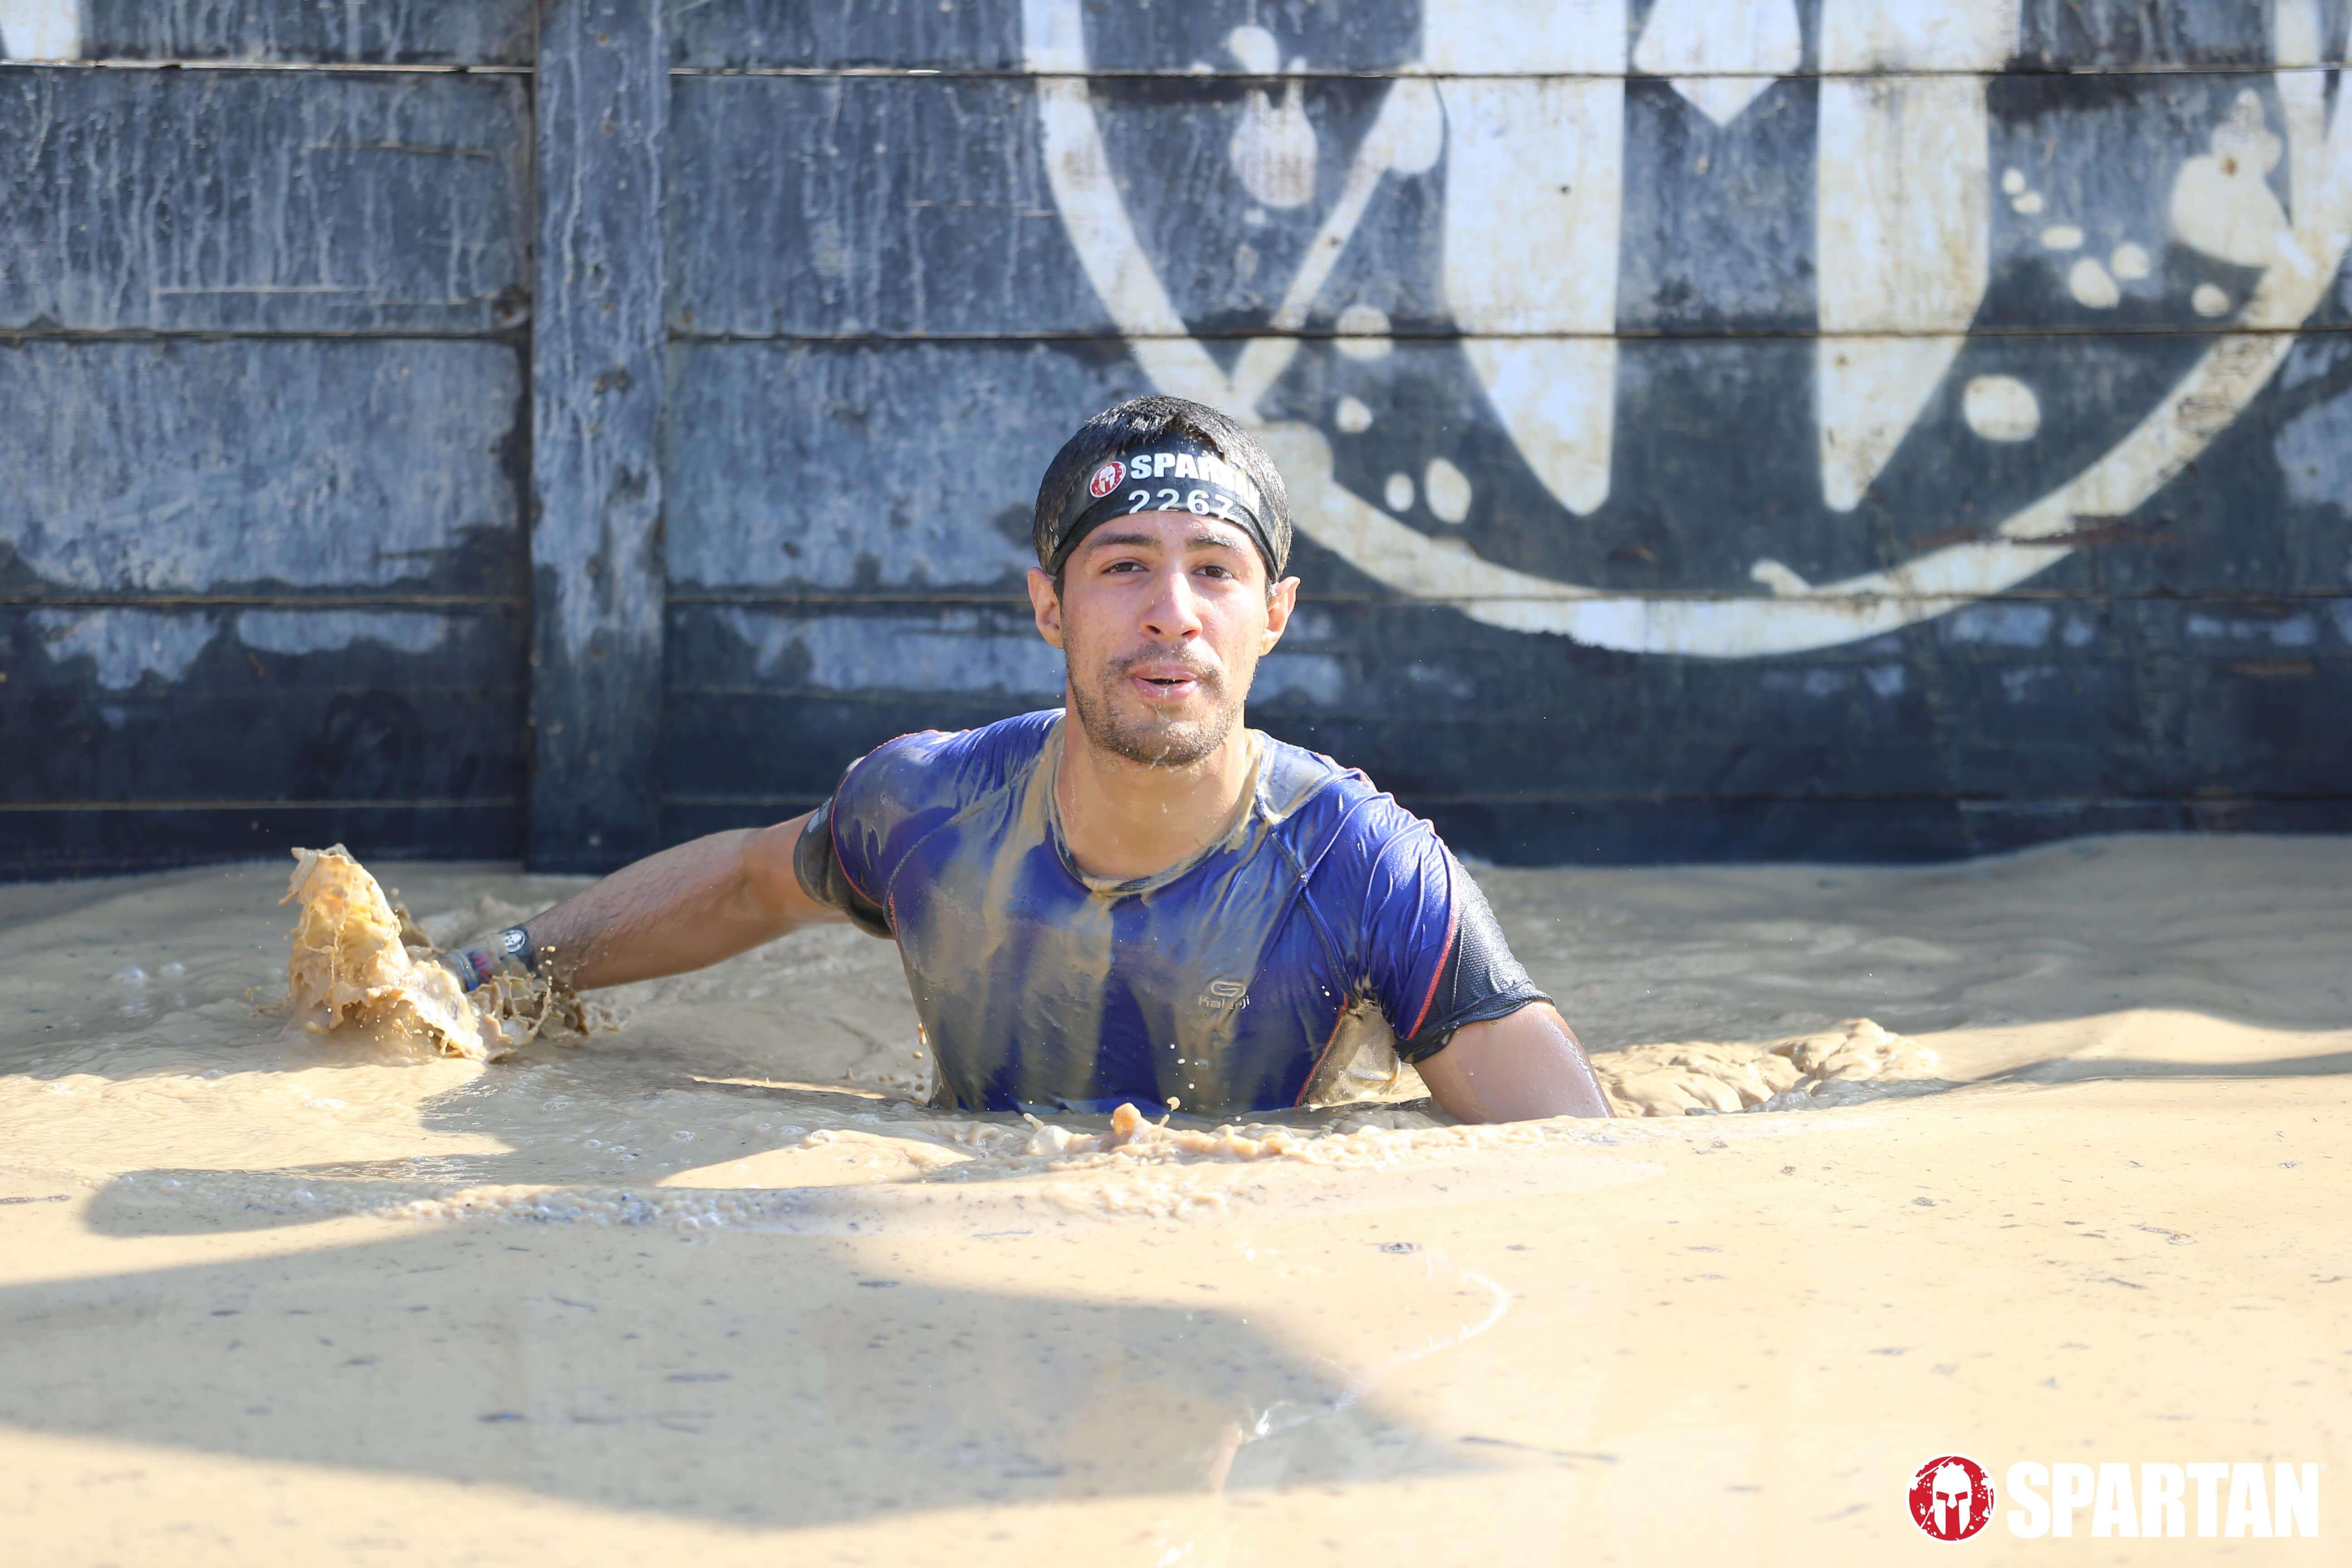 Getting a bit muddy during Spartan race